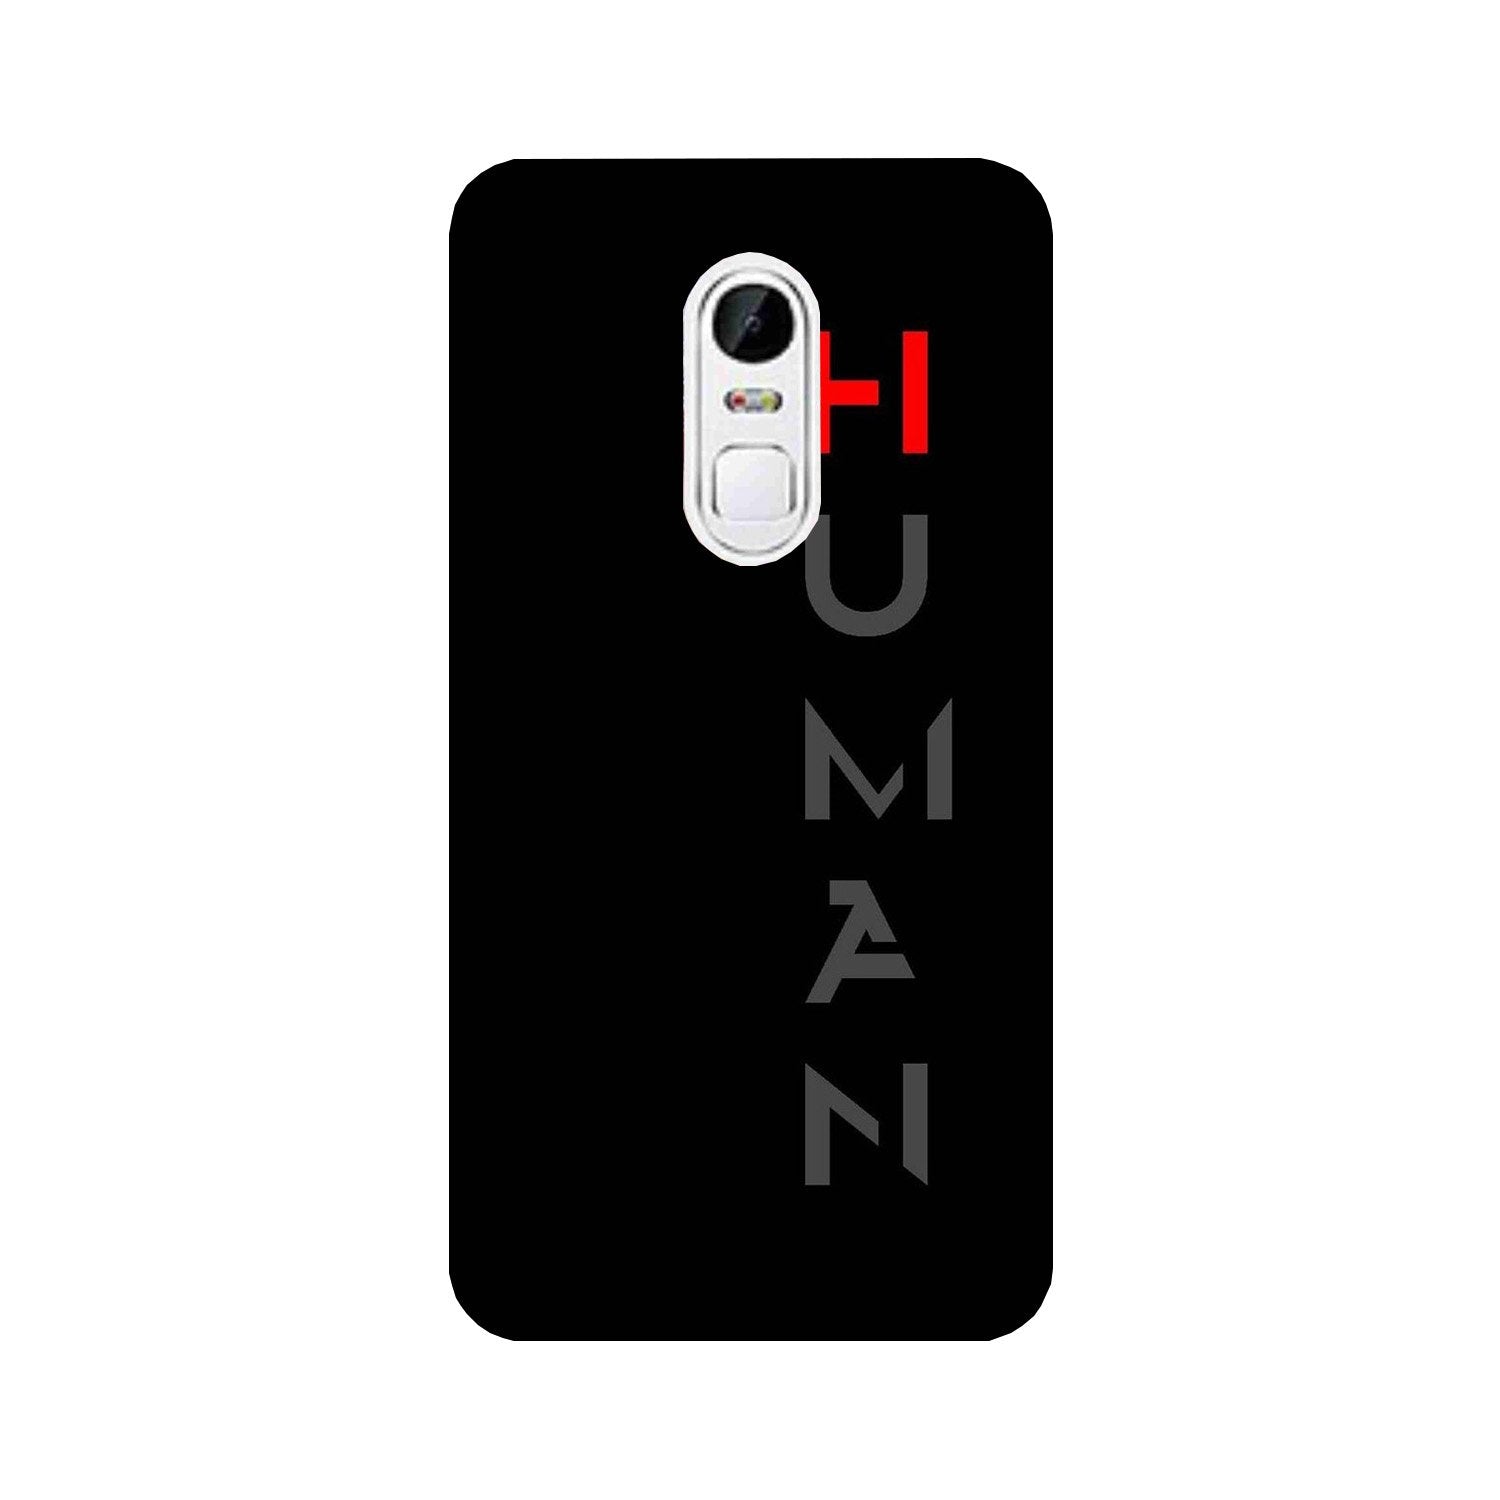 Human Case for Lenovo Vibe X3(Design - 141)